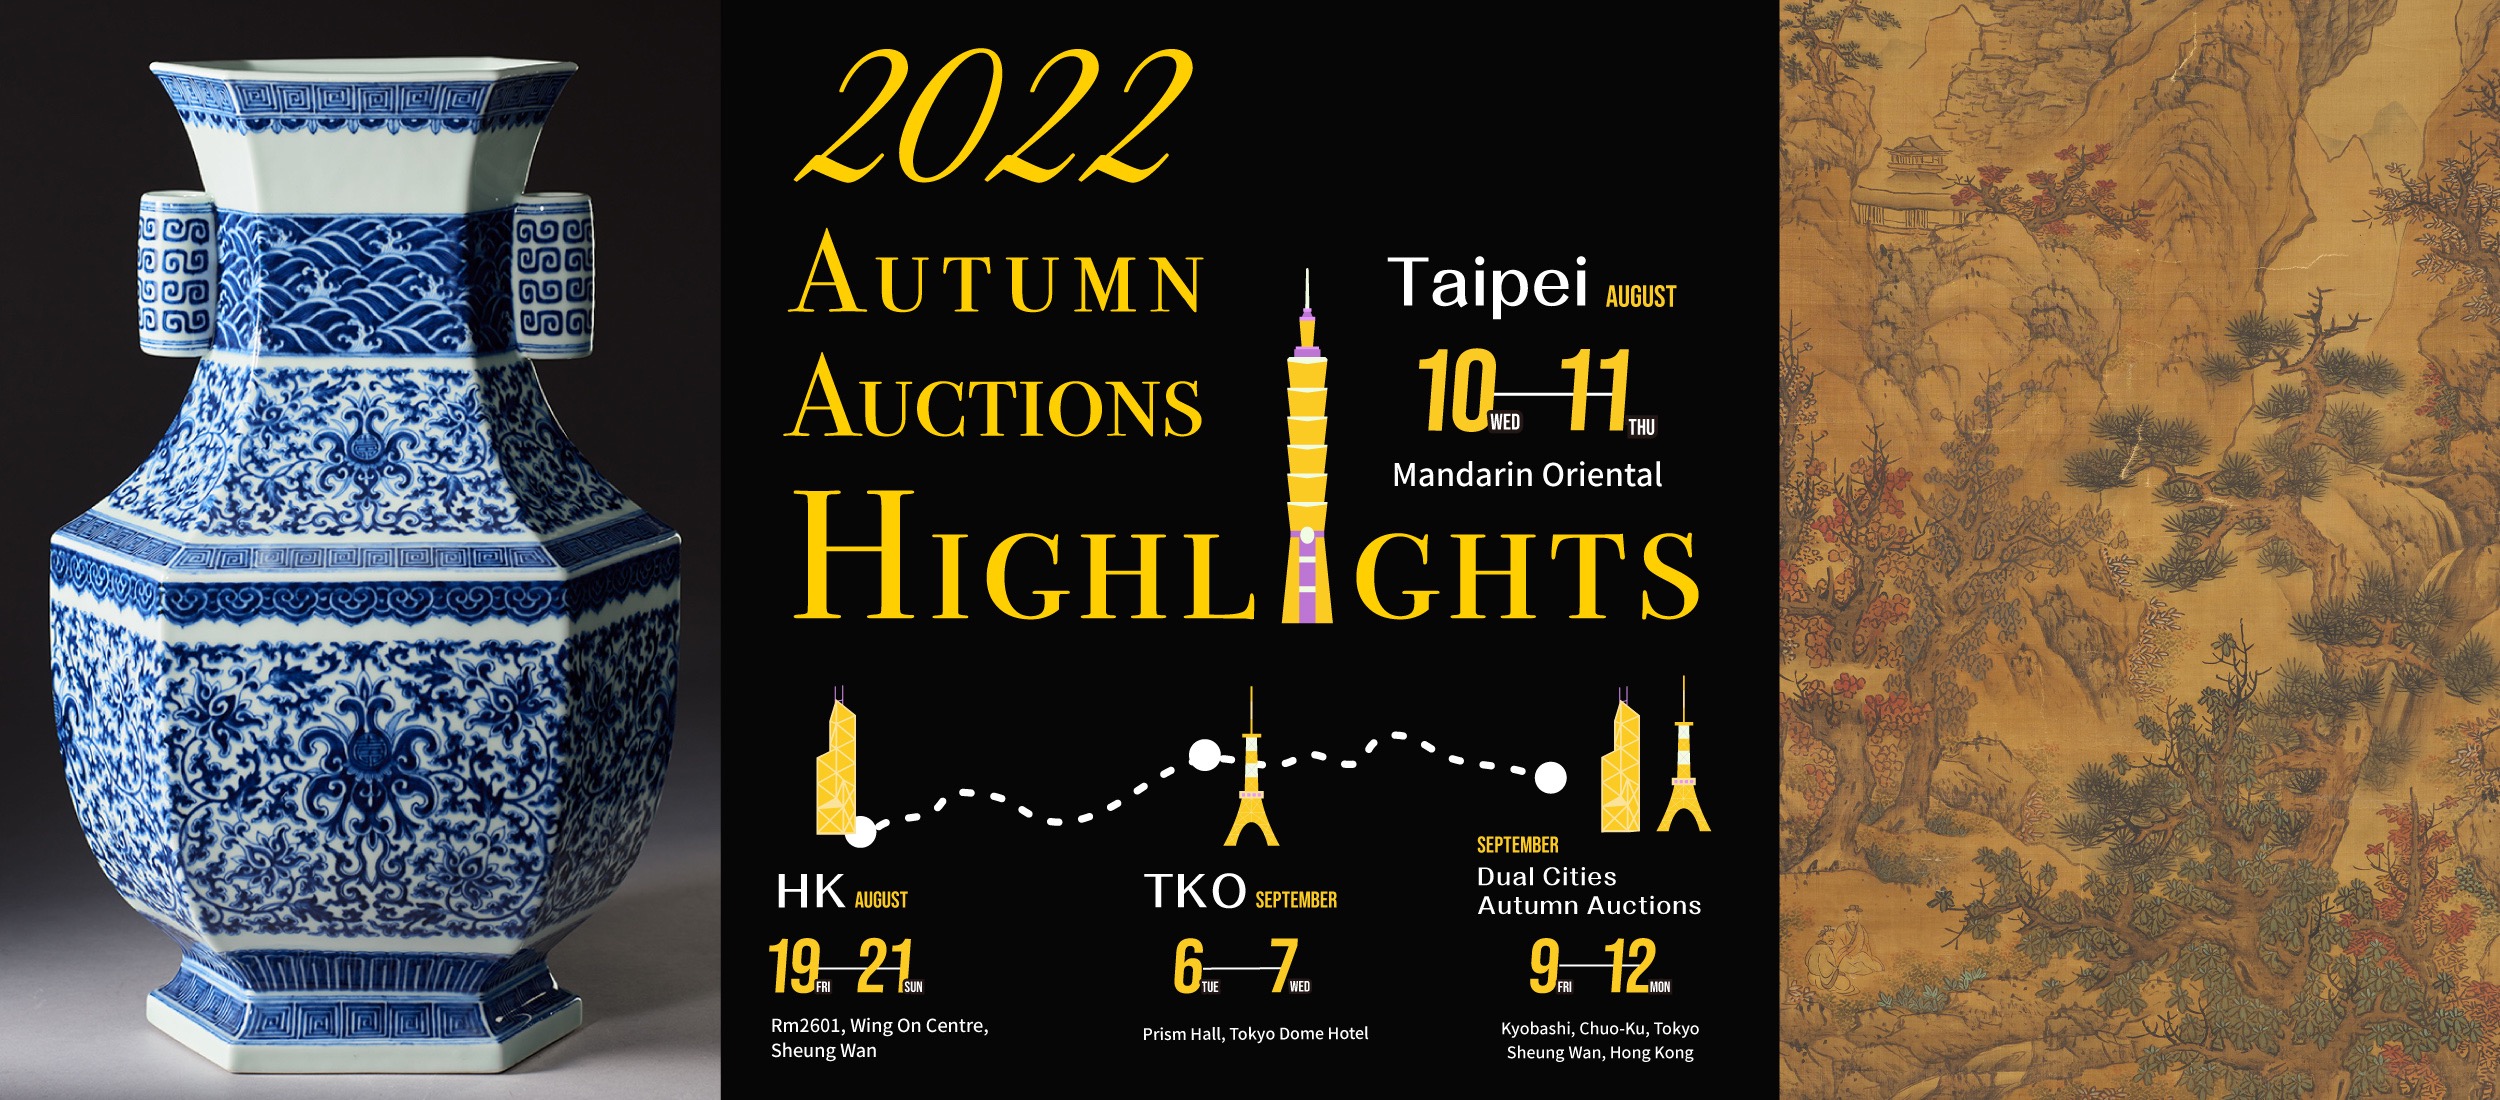 Asia Tours: 2022 Autumn Auction Highlights